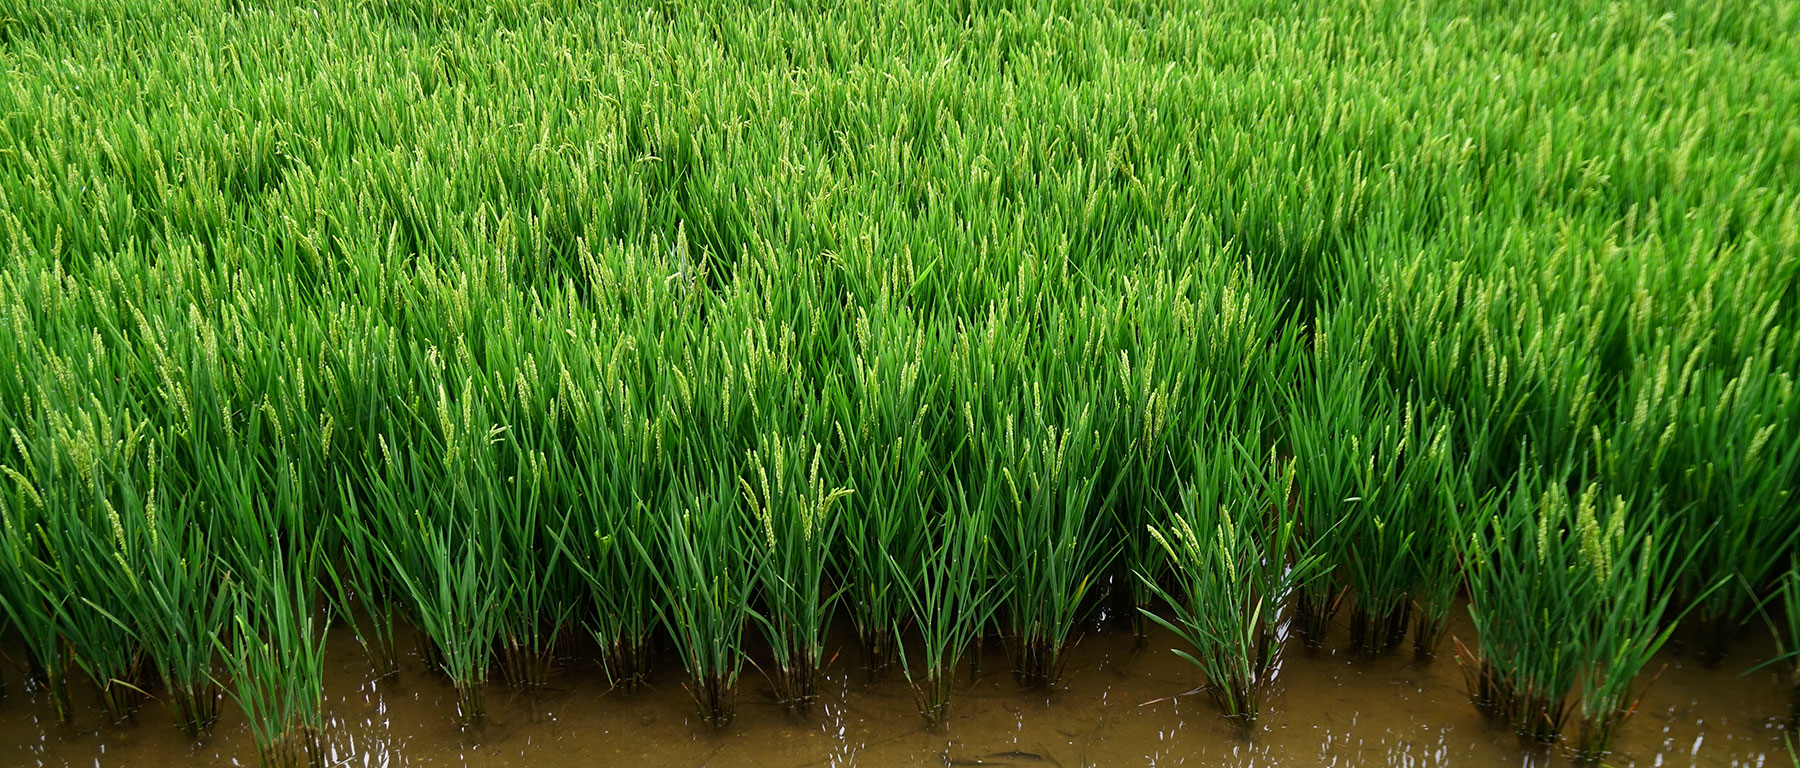 Rice growing plants